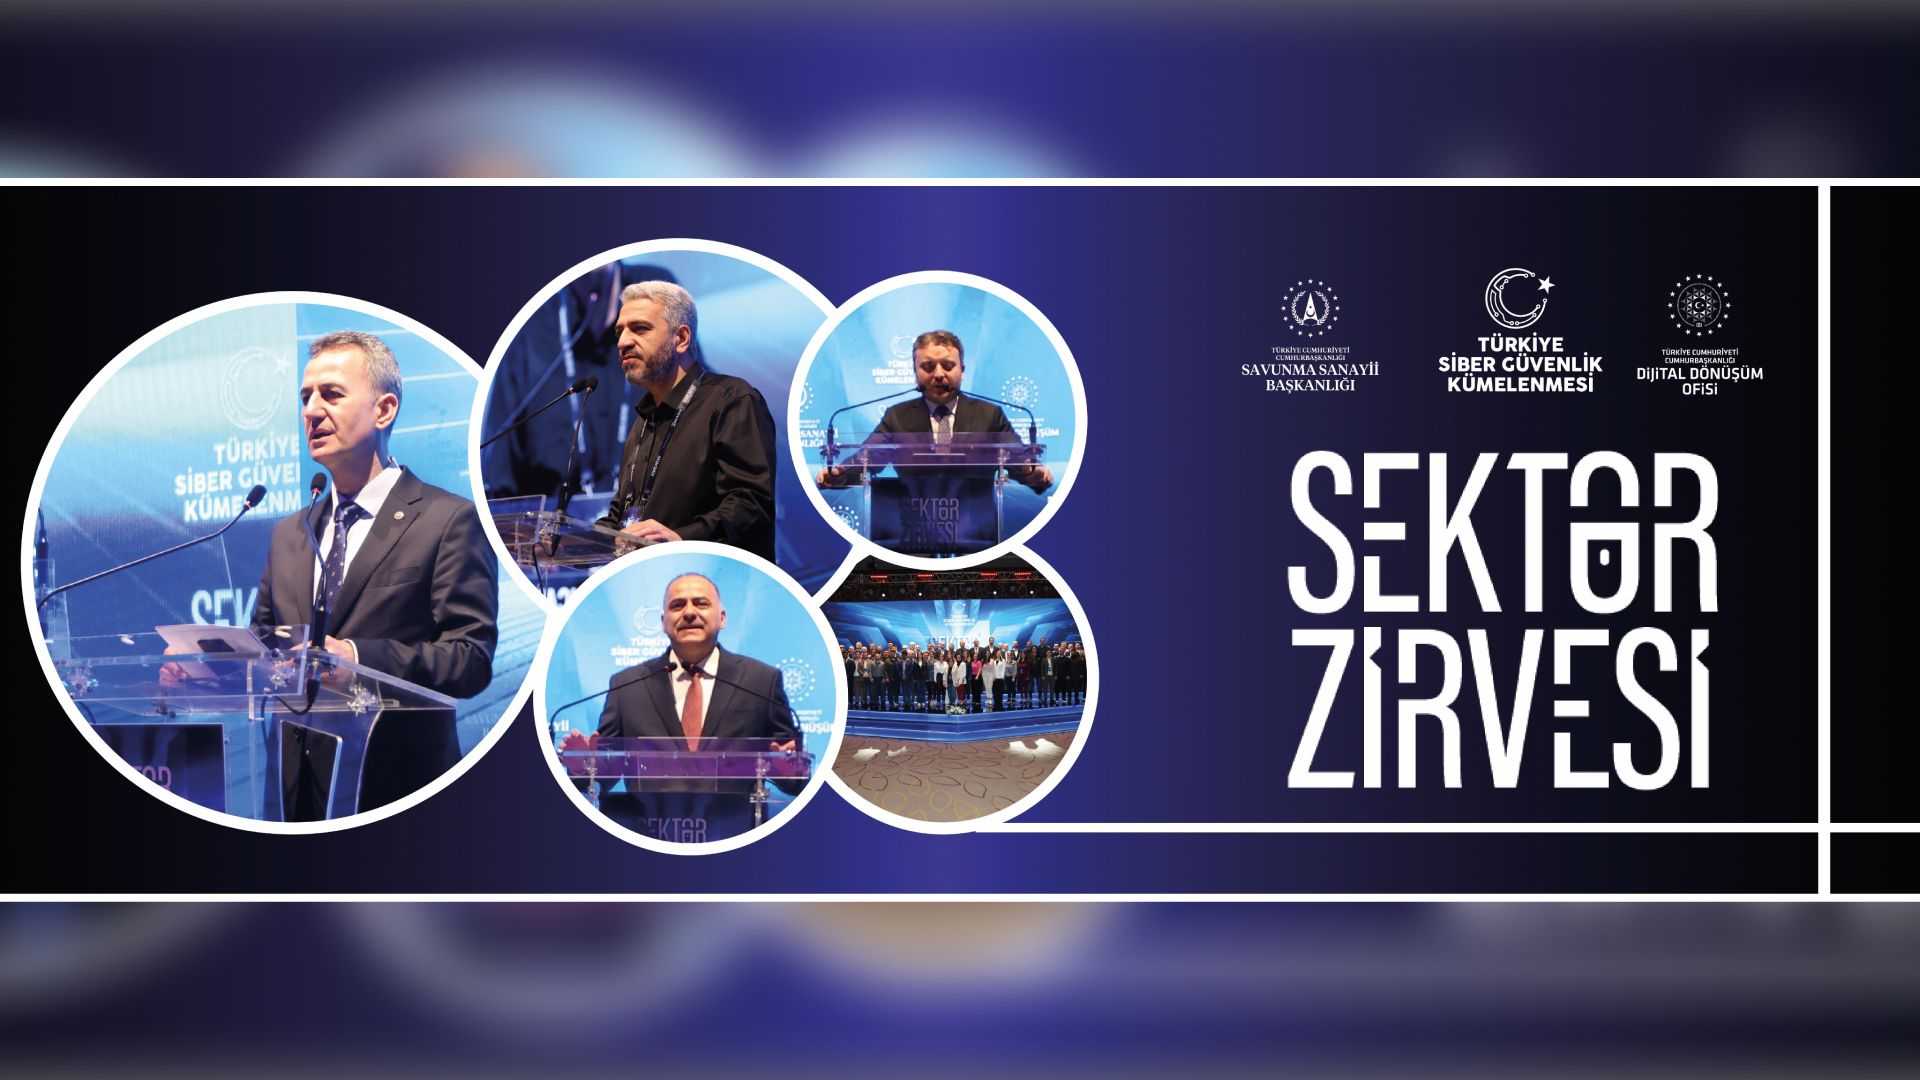 4th Sector Summit Organized by Türkiye Cyber Security Cluster Was Held 